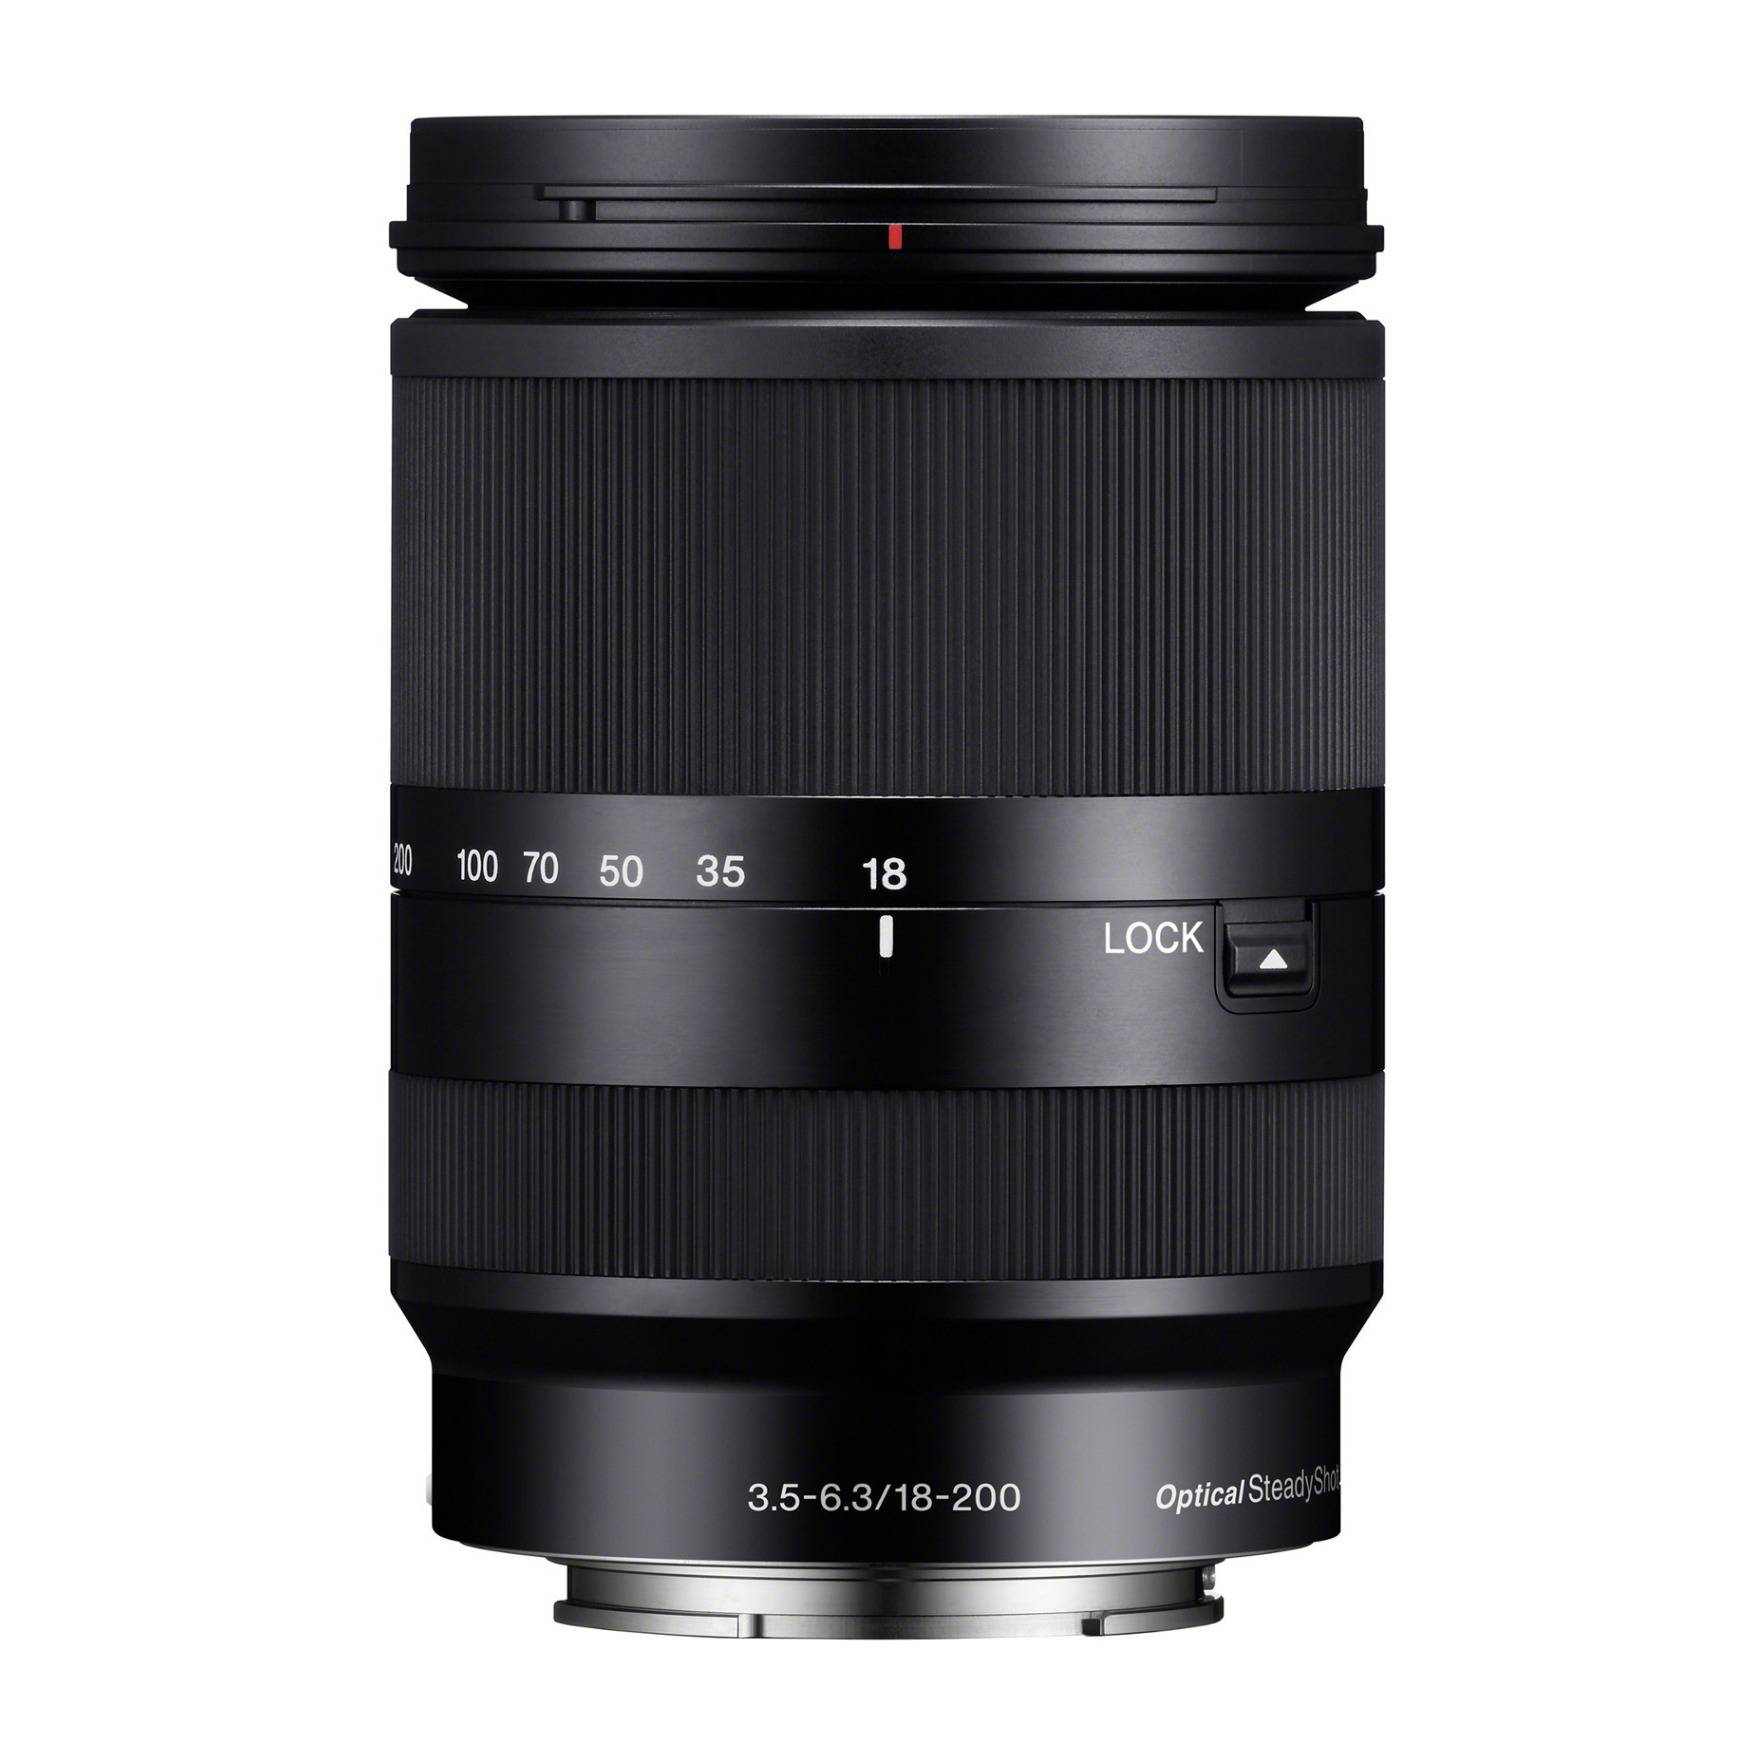 Sony 18-200mm f/3.5-6.3 Zoom OSS Lens for NEX Cameras